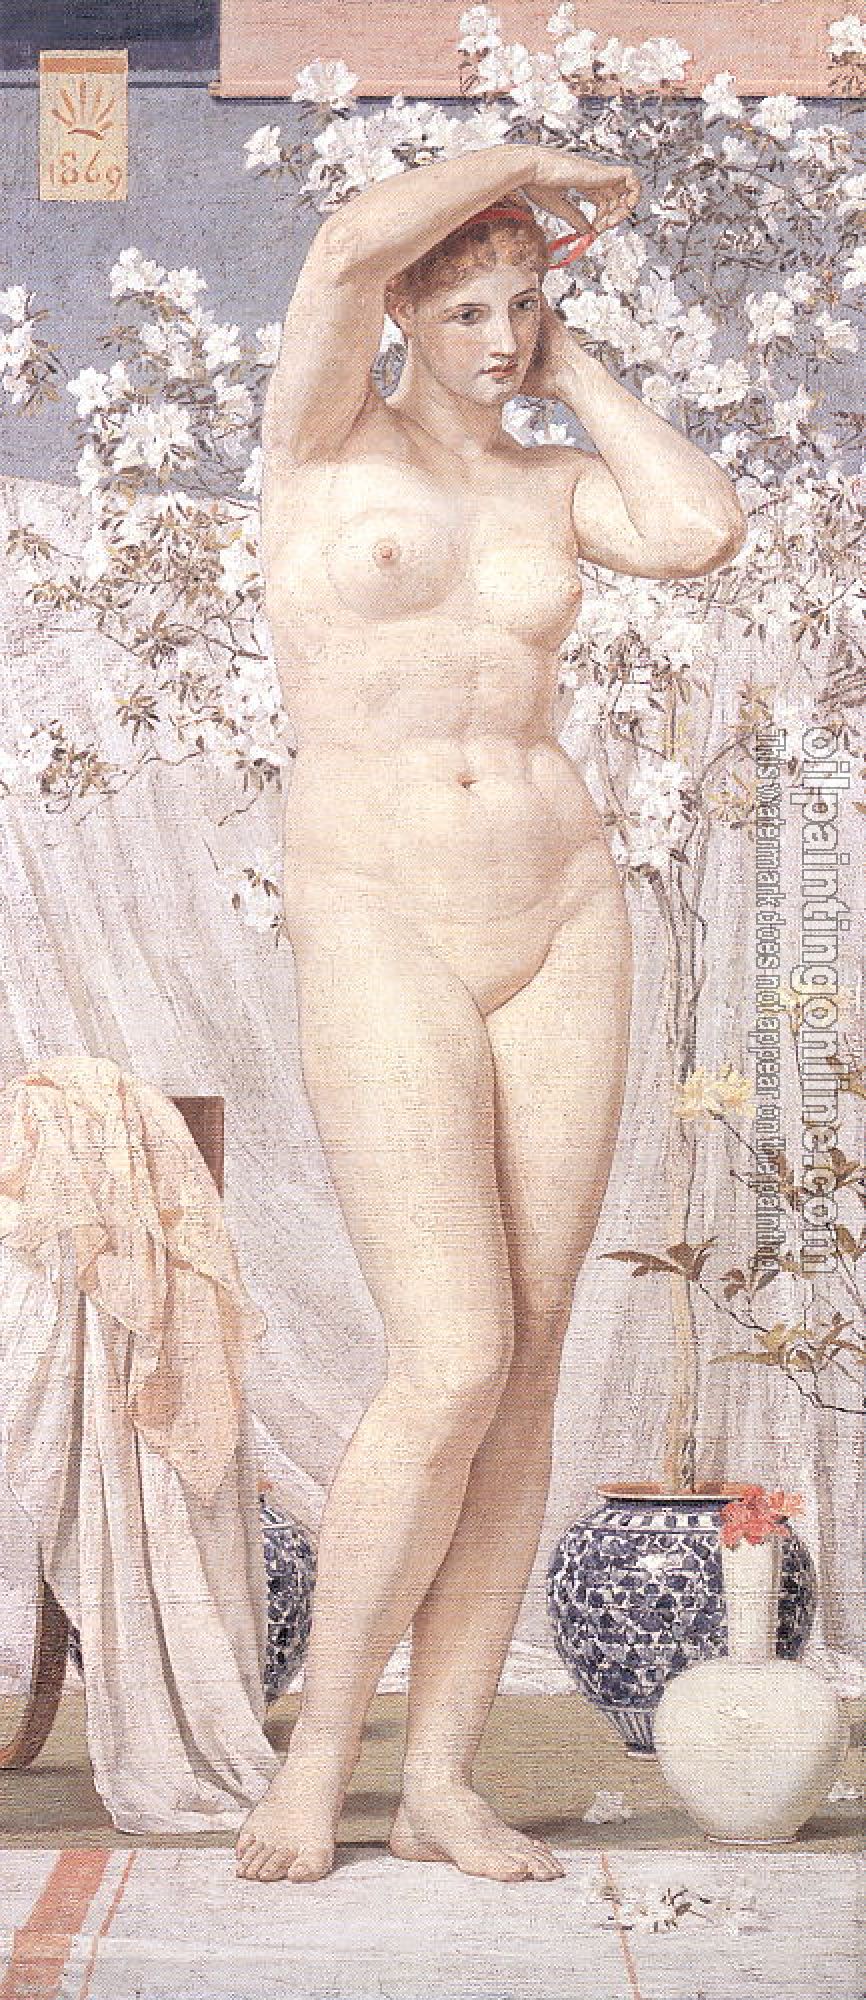 Moore, Albert Joseph - A Venus